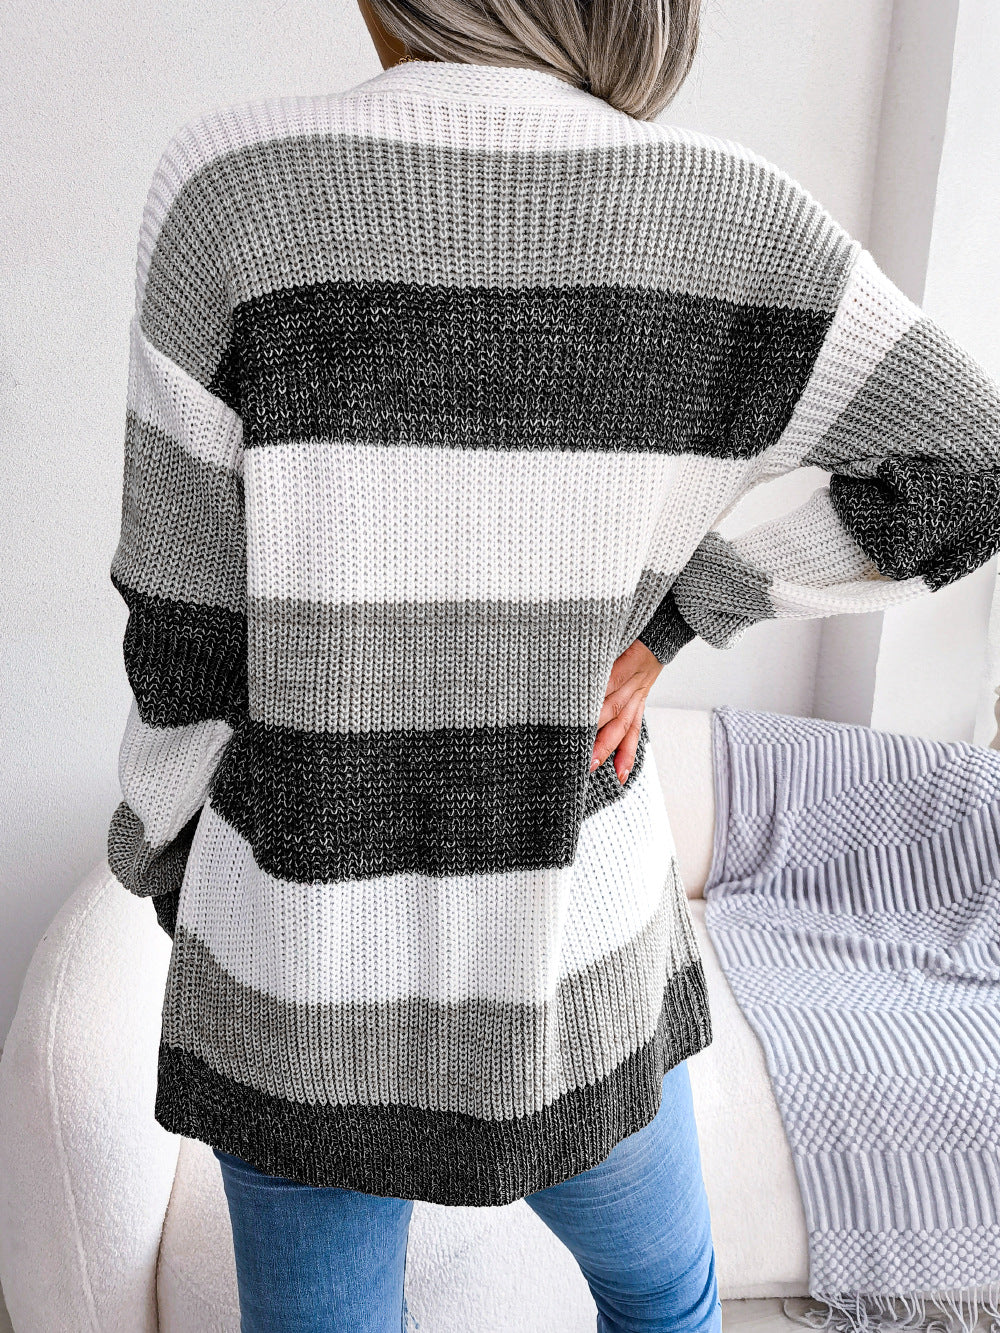 Plaid Sweater Women Casual Lantern Sleeves Cardigan Jacket Outerwear